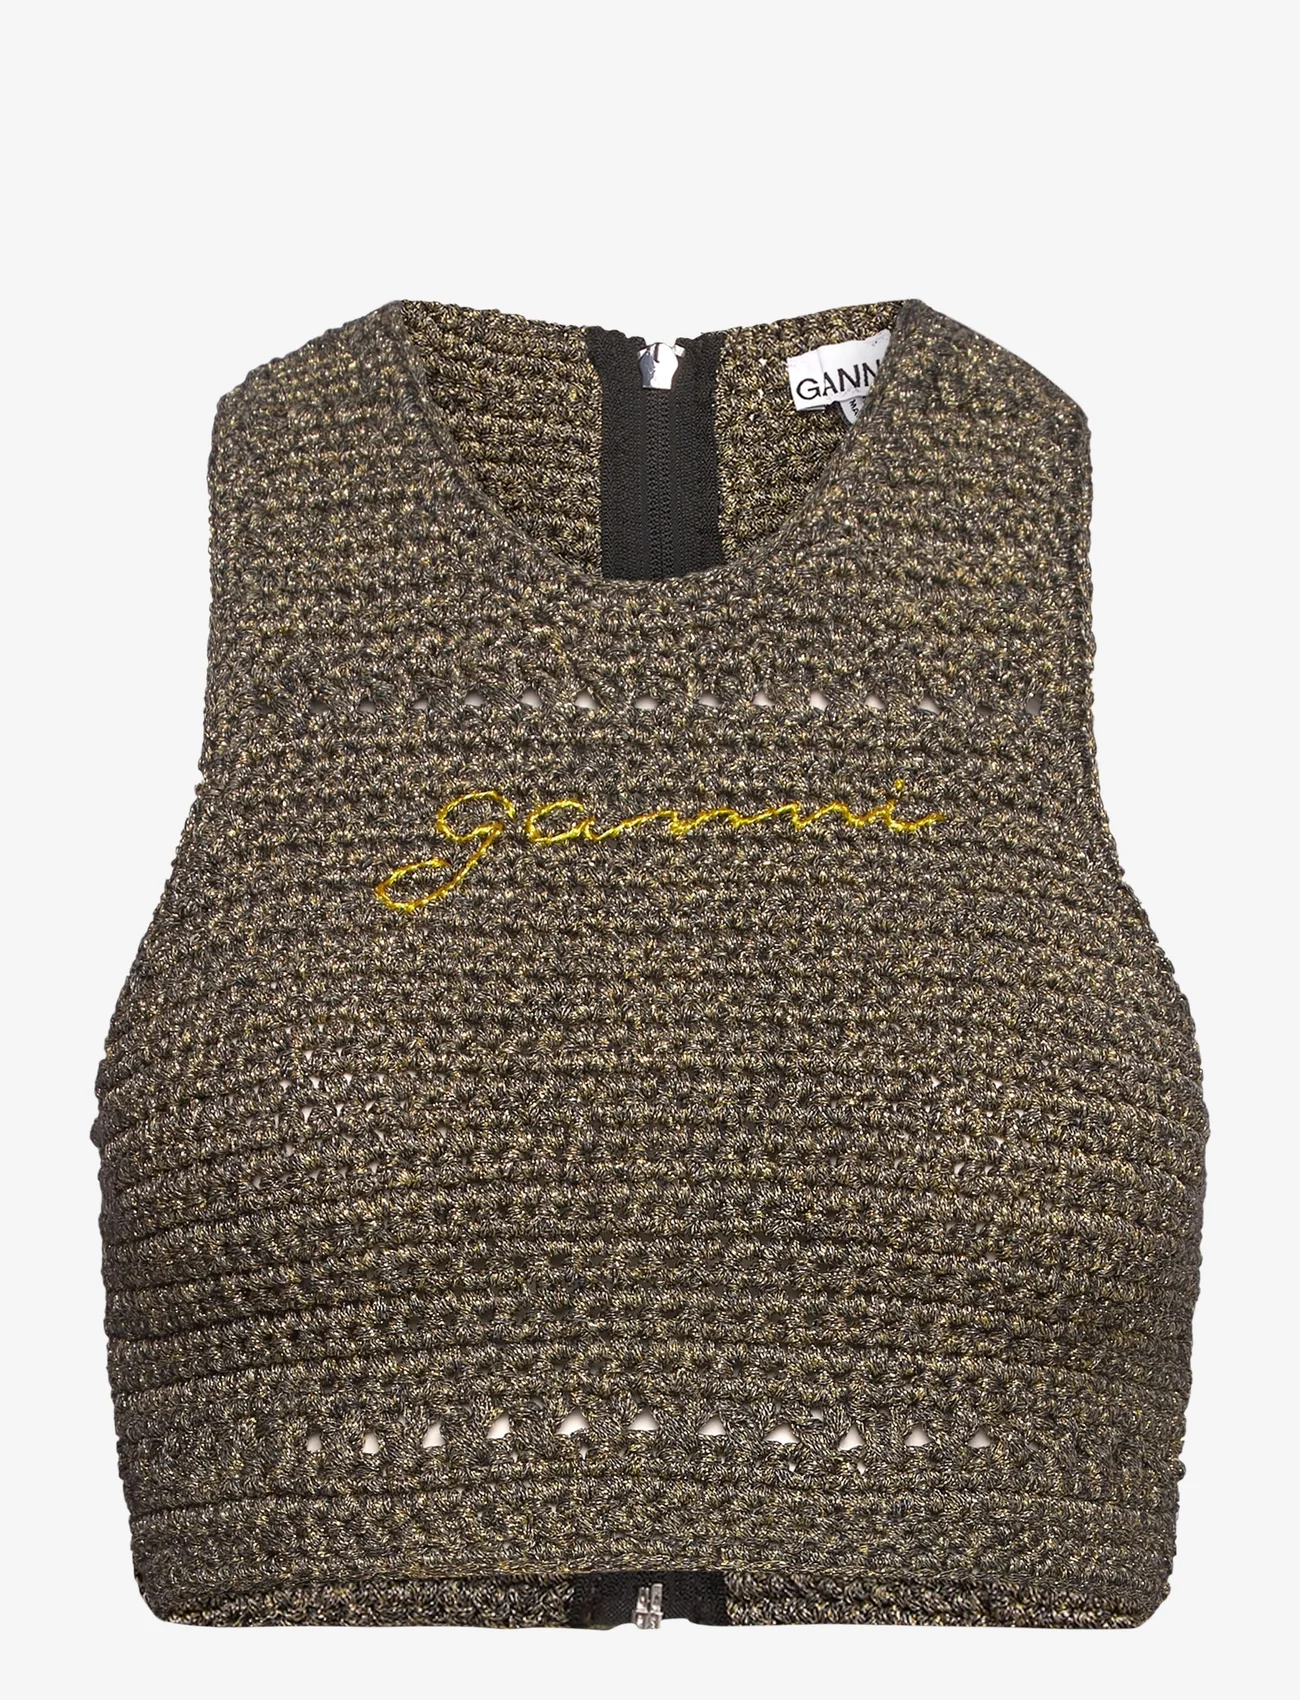 Ganni - Crochet Racerback Top - bandeau-bikinis - black/gold - 0